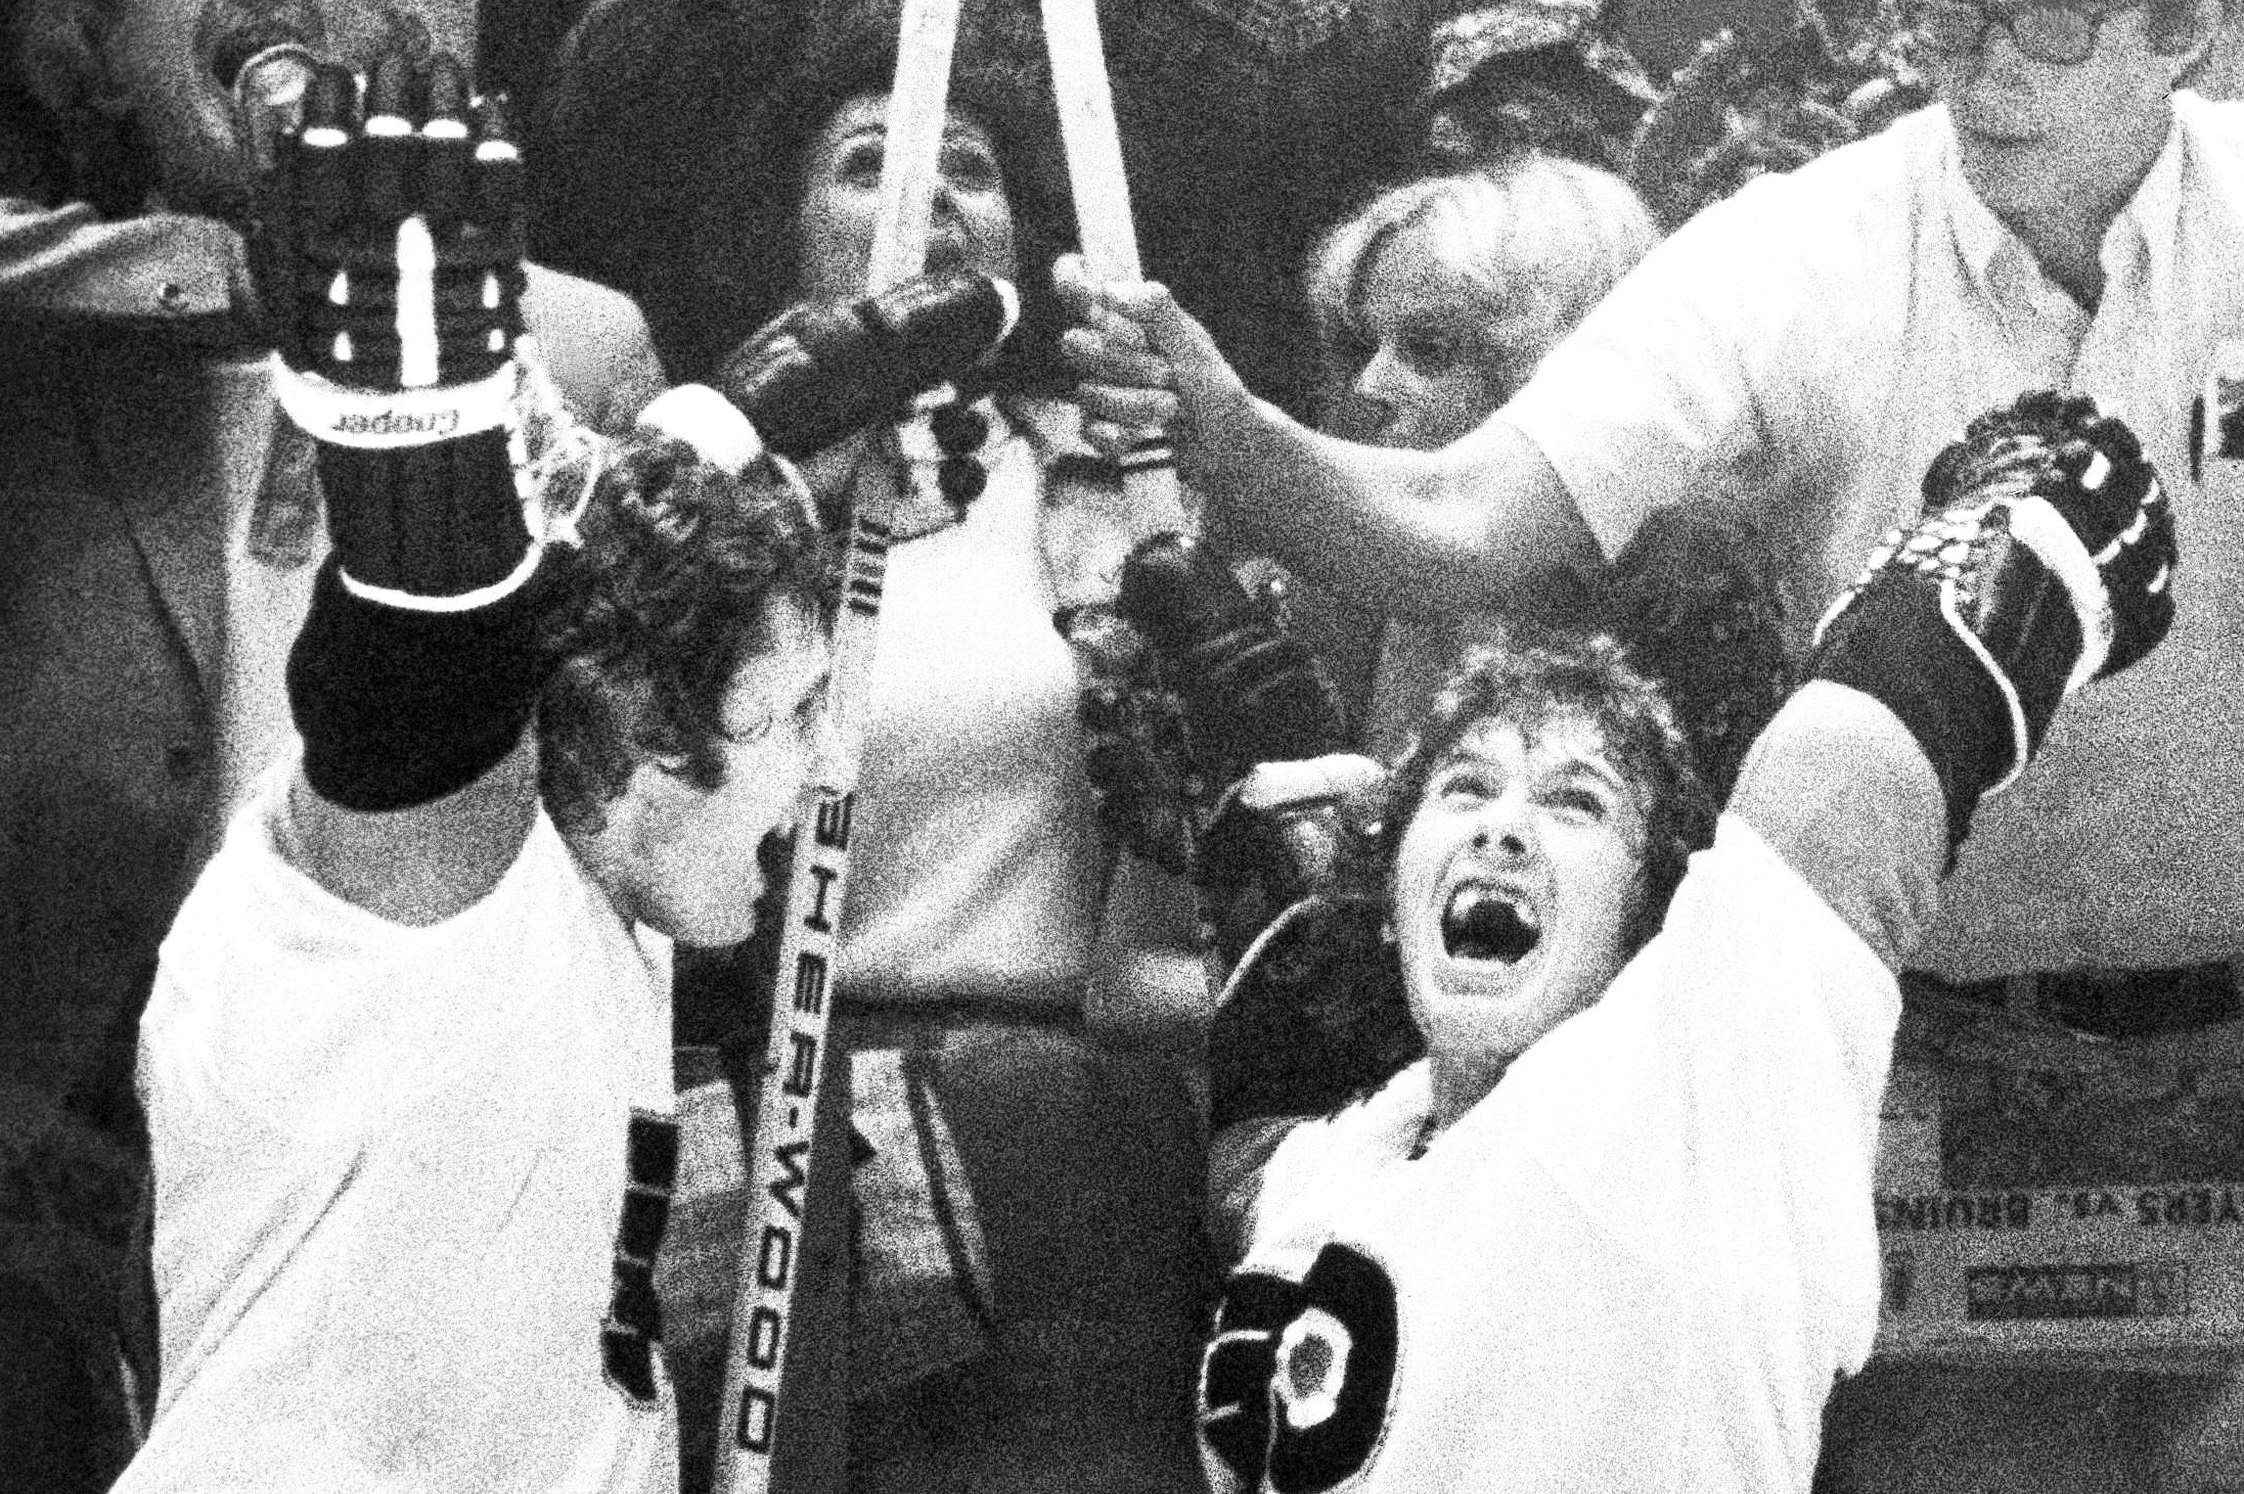 1974 Philadelphia Flyers - Championship Stories (podcast)